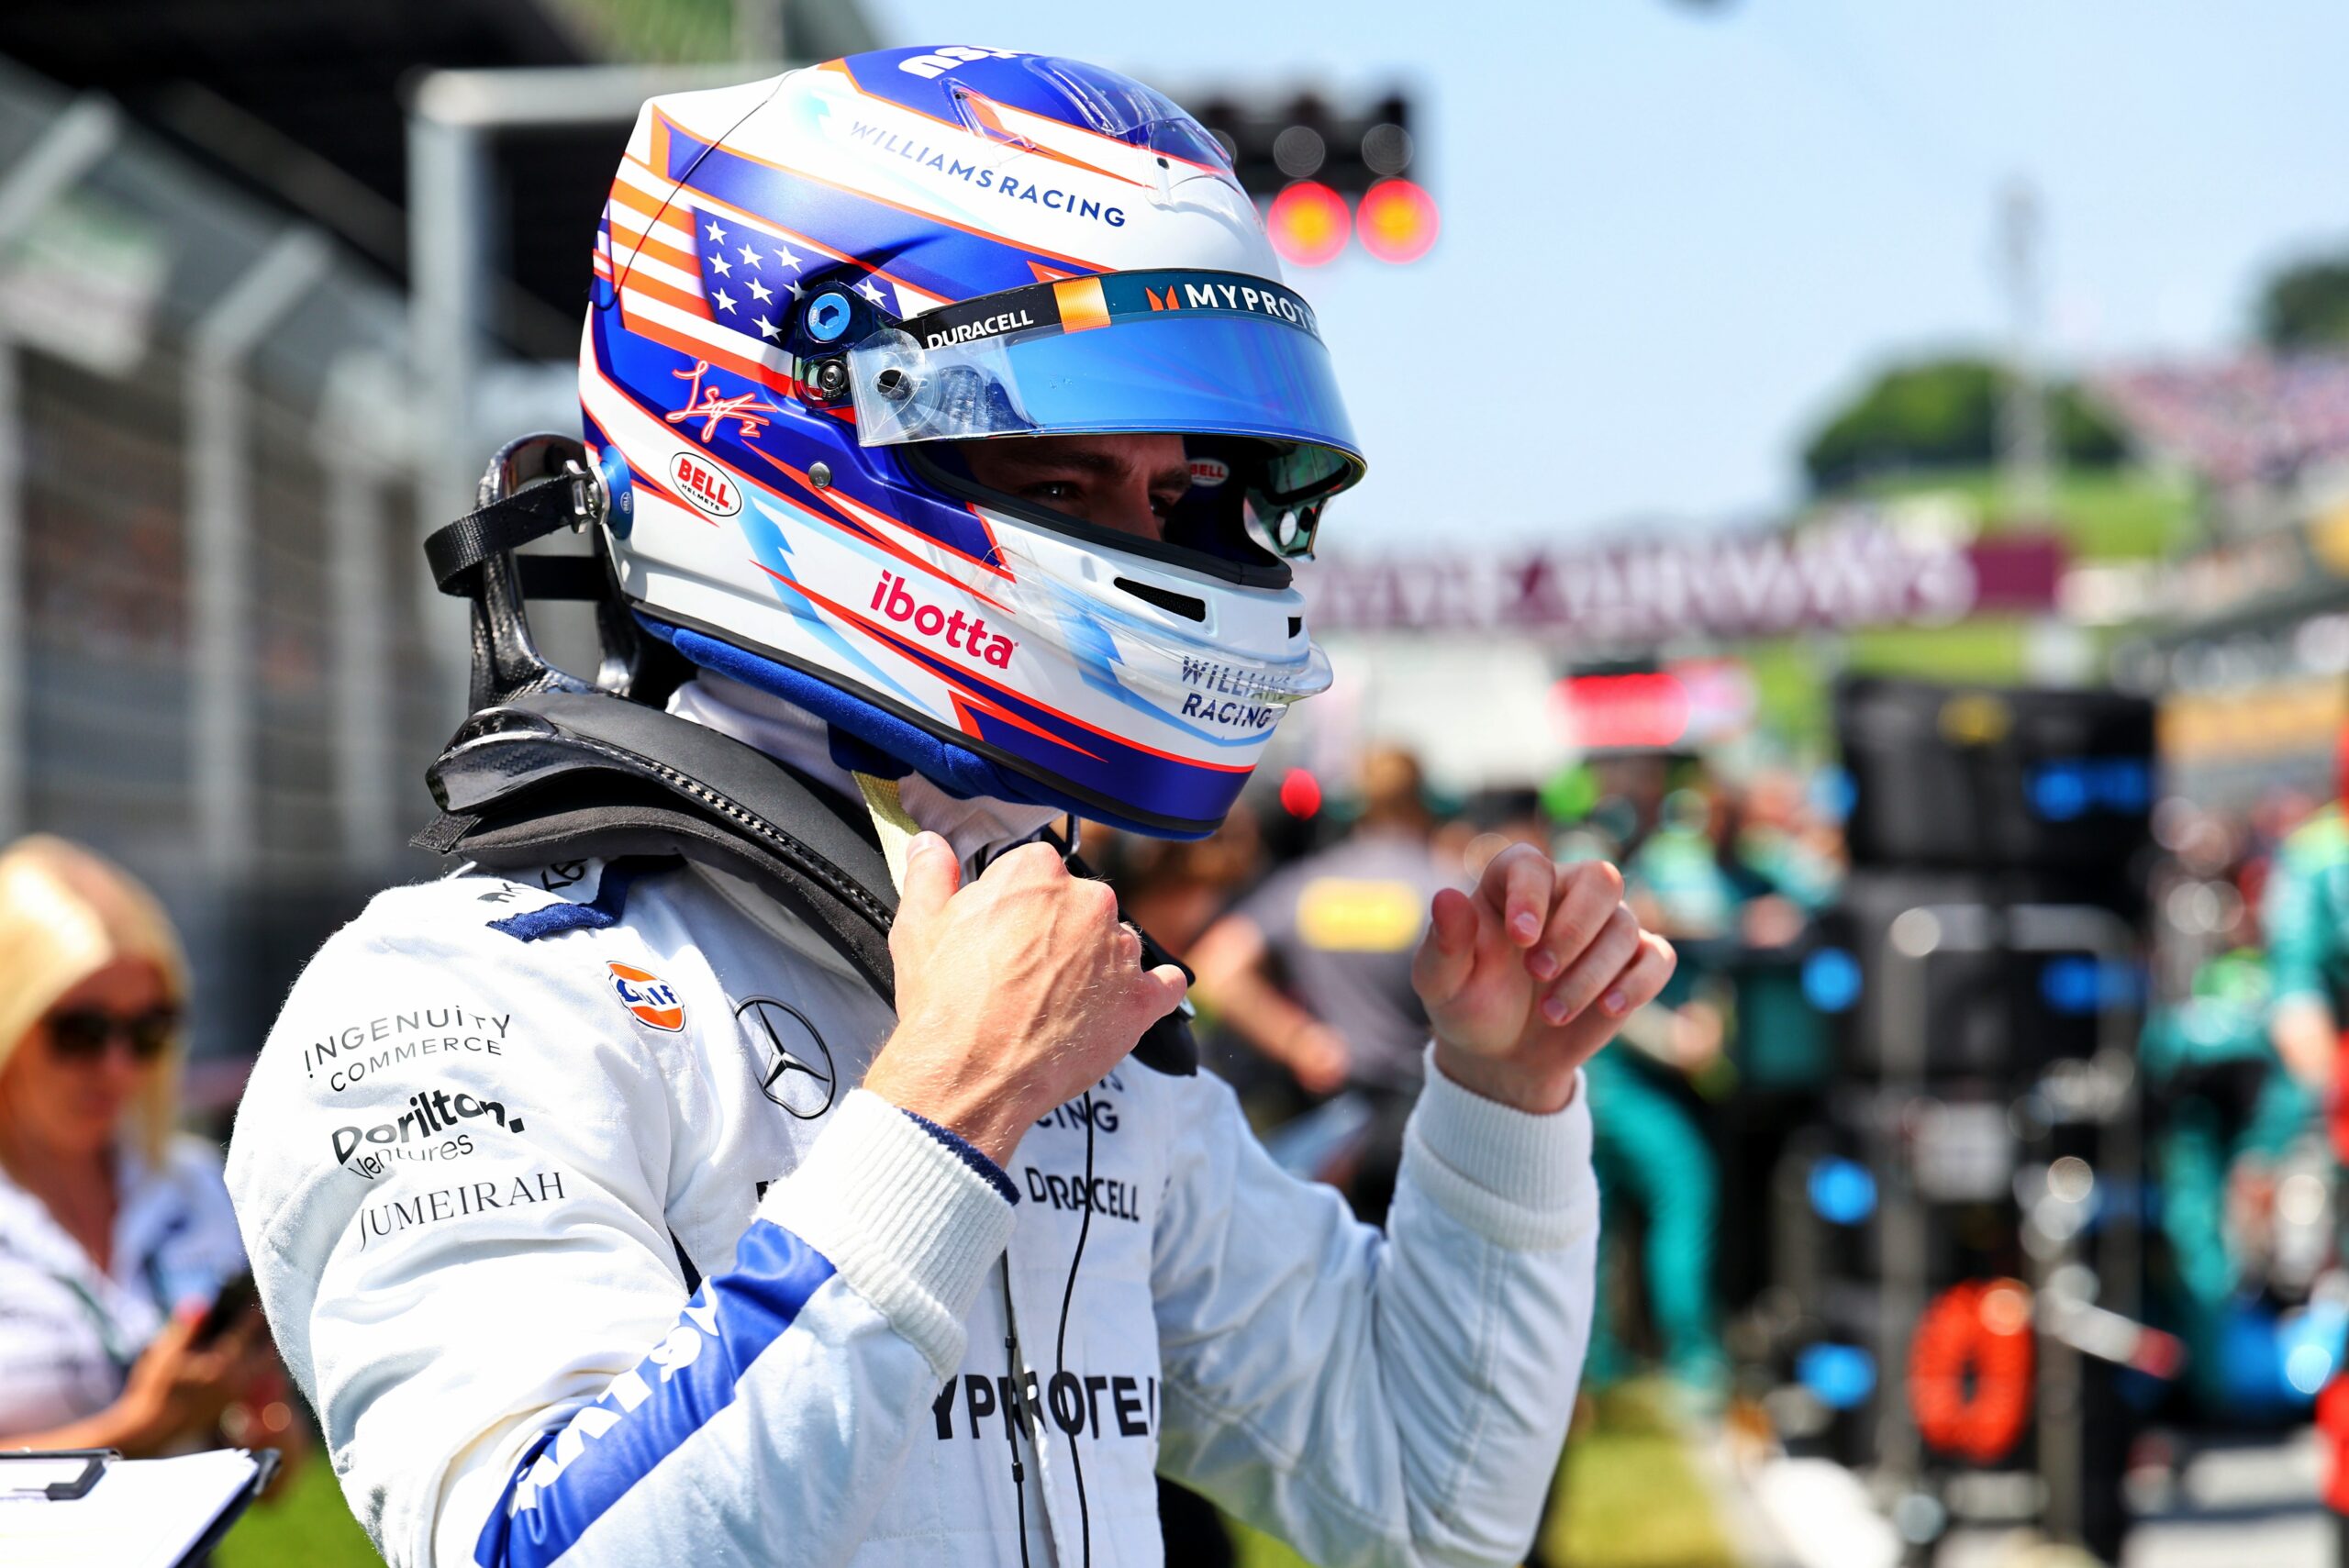 Logan Sargeant putting his helmet on ahead of the Austrian Grand Prix